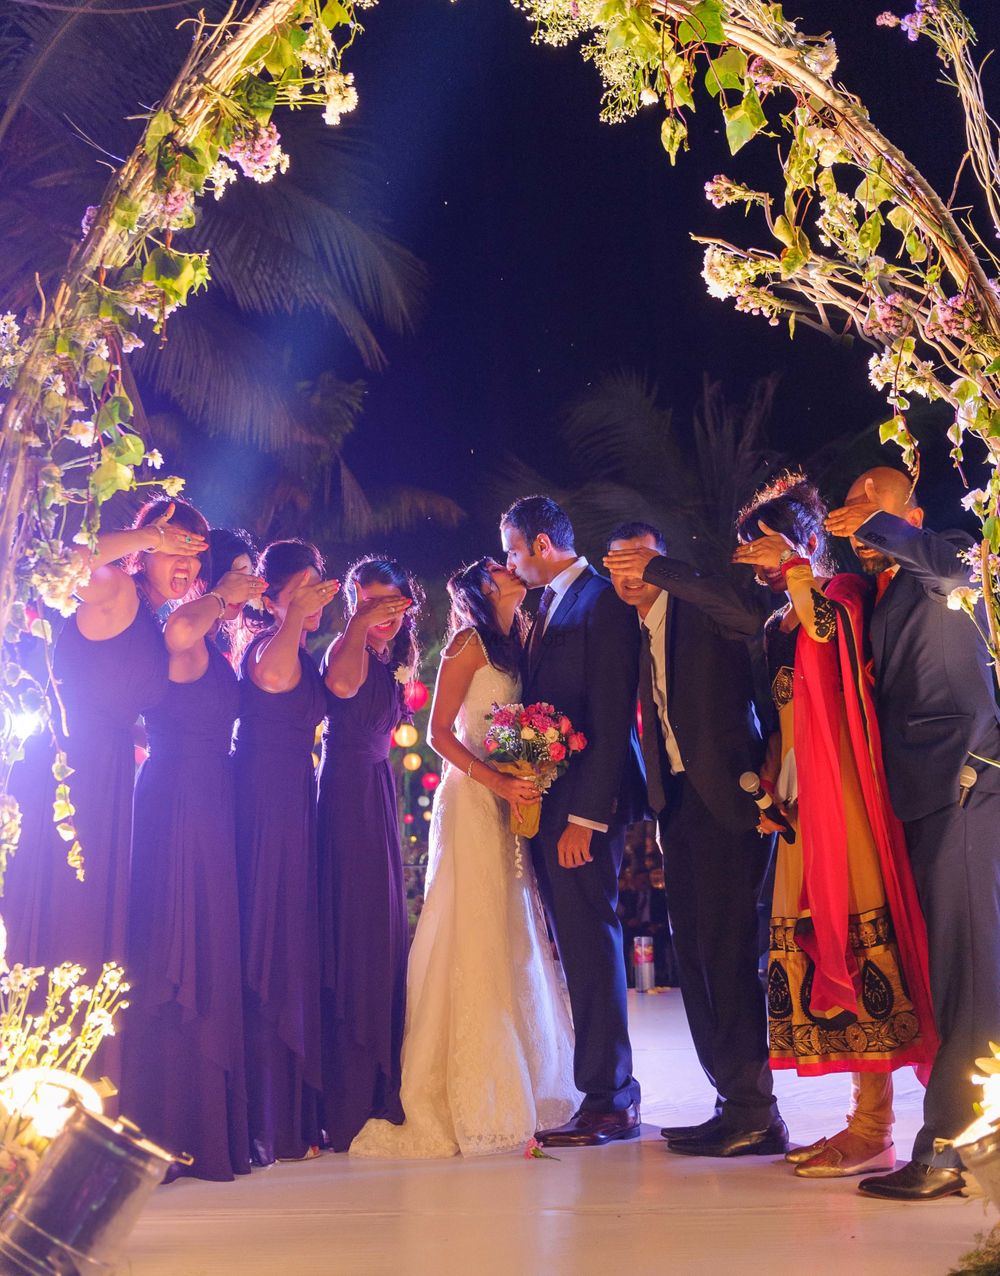 Photo From Destination wedding-5 Day plan - By Weddings by Shubharambh